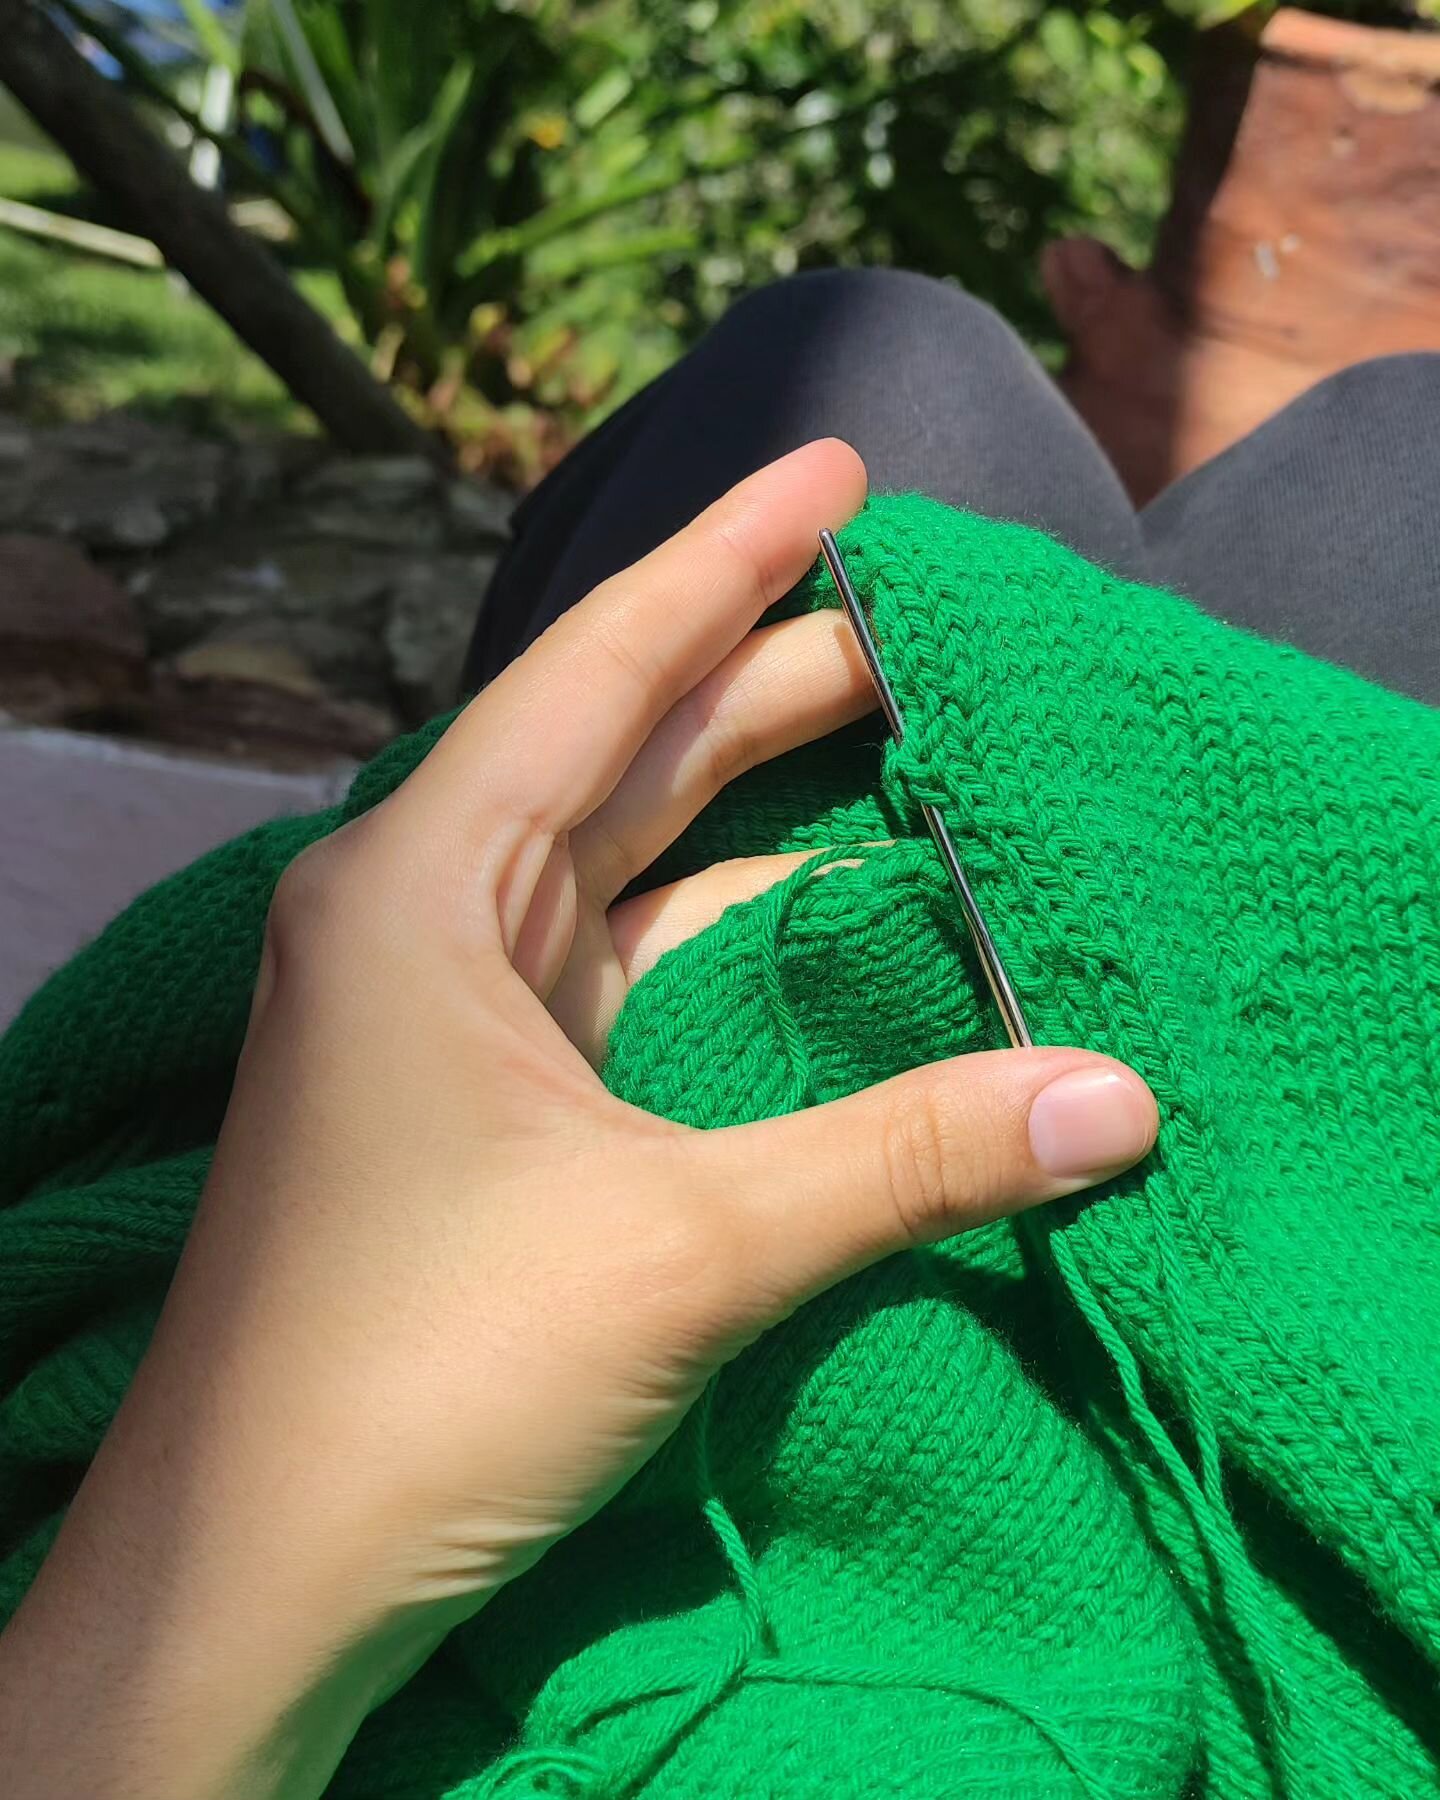 Sunshine and knitting. What else can one ask? ✨✨
.
.
.
.
.
.
#knitttingaddict #knittinginthesun #knittersofinstagram #knitspiration #allyouknitislove